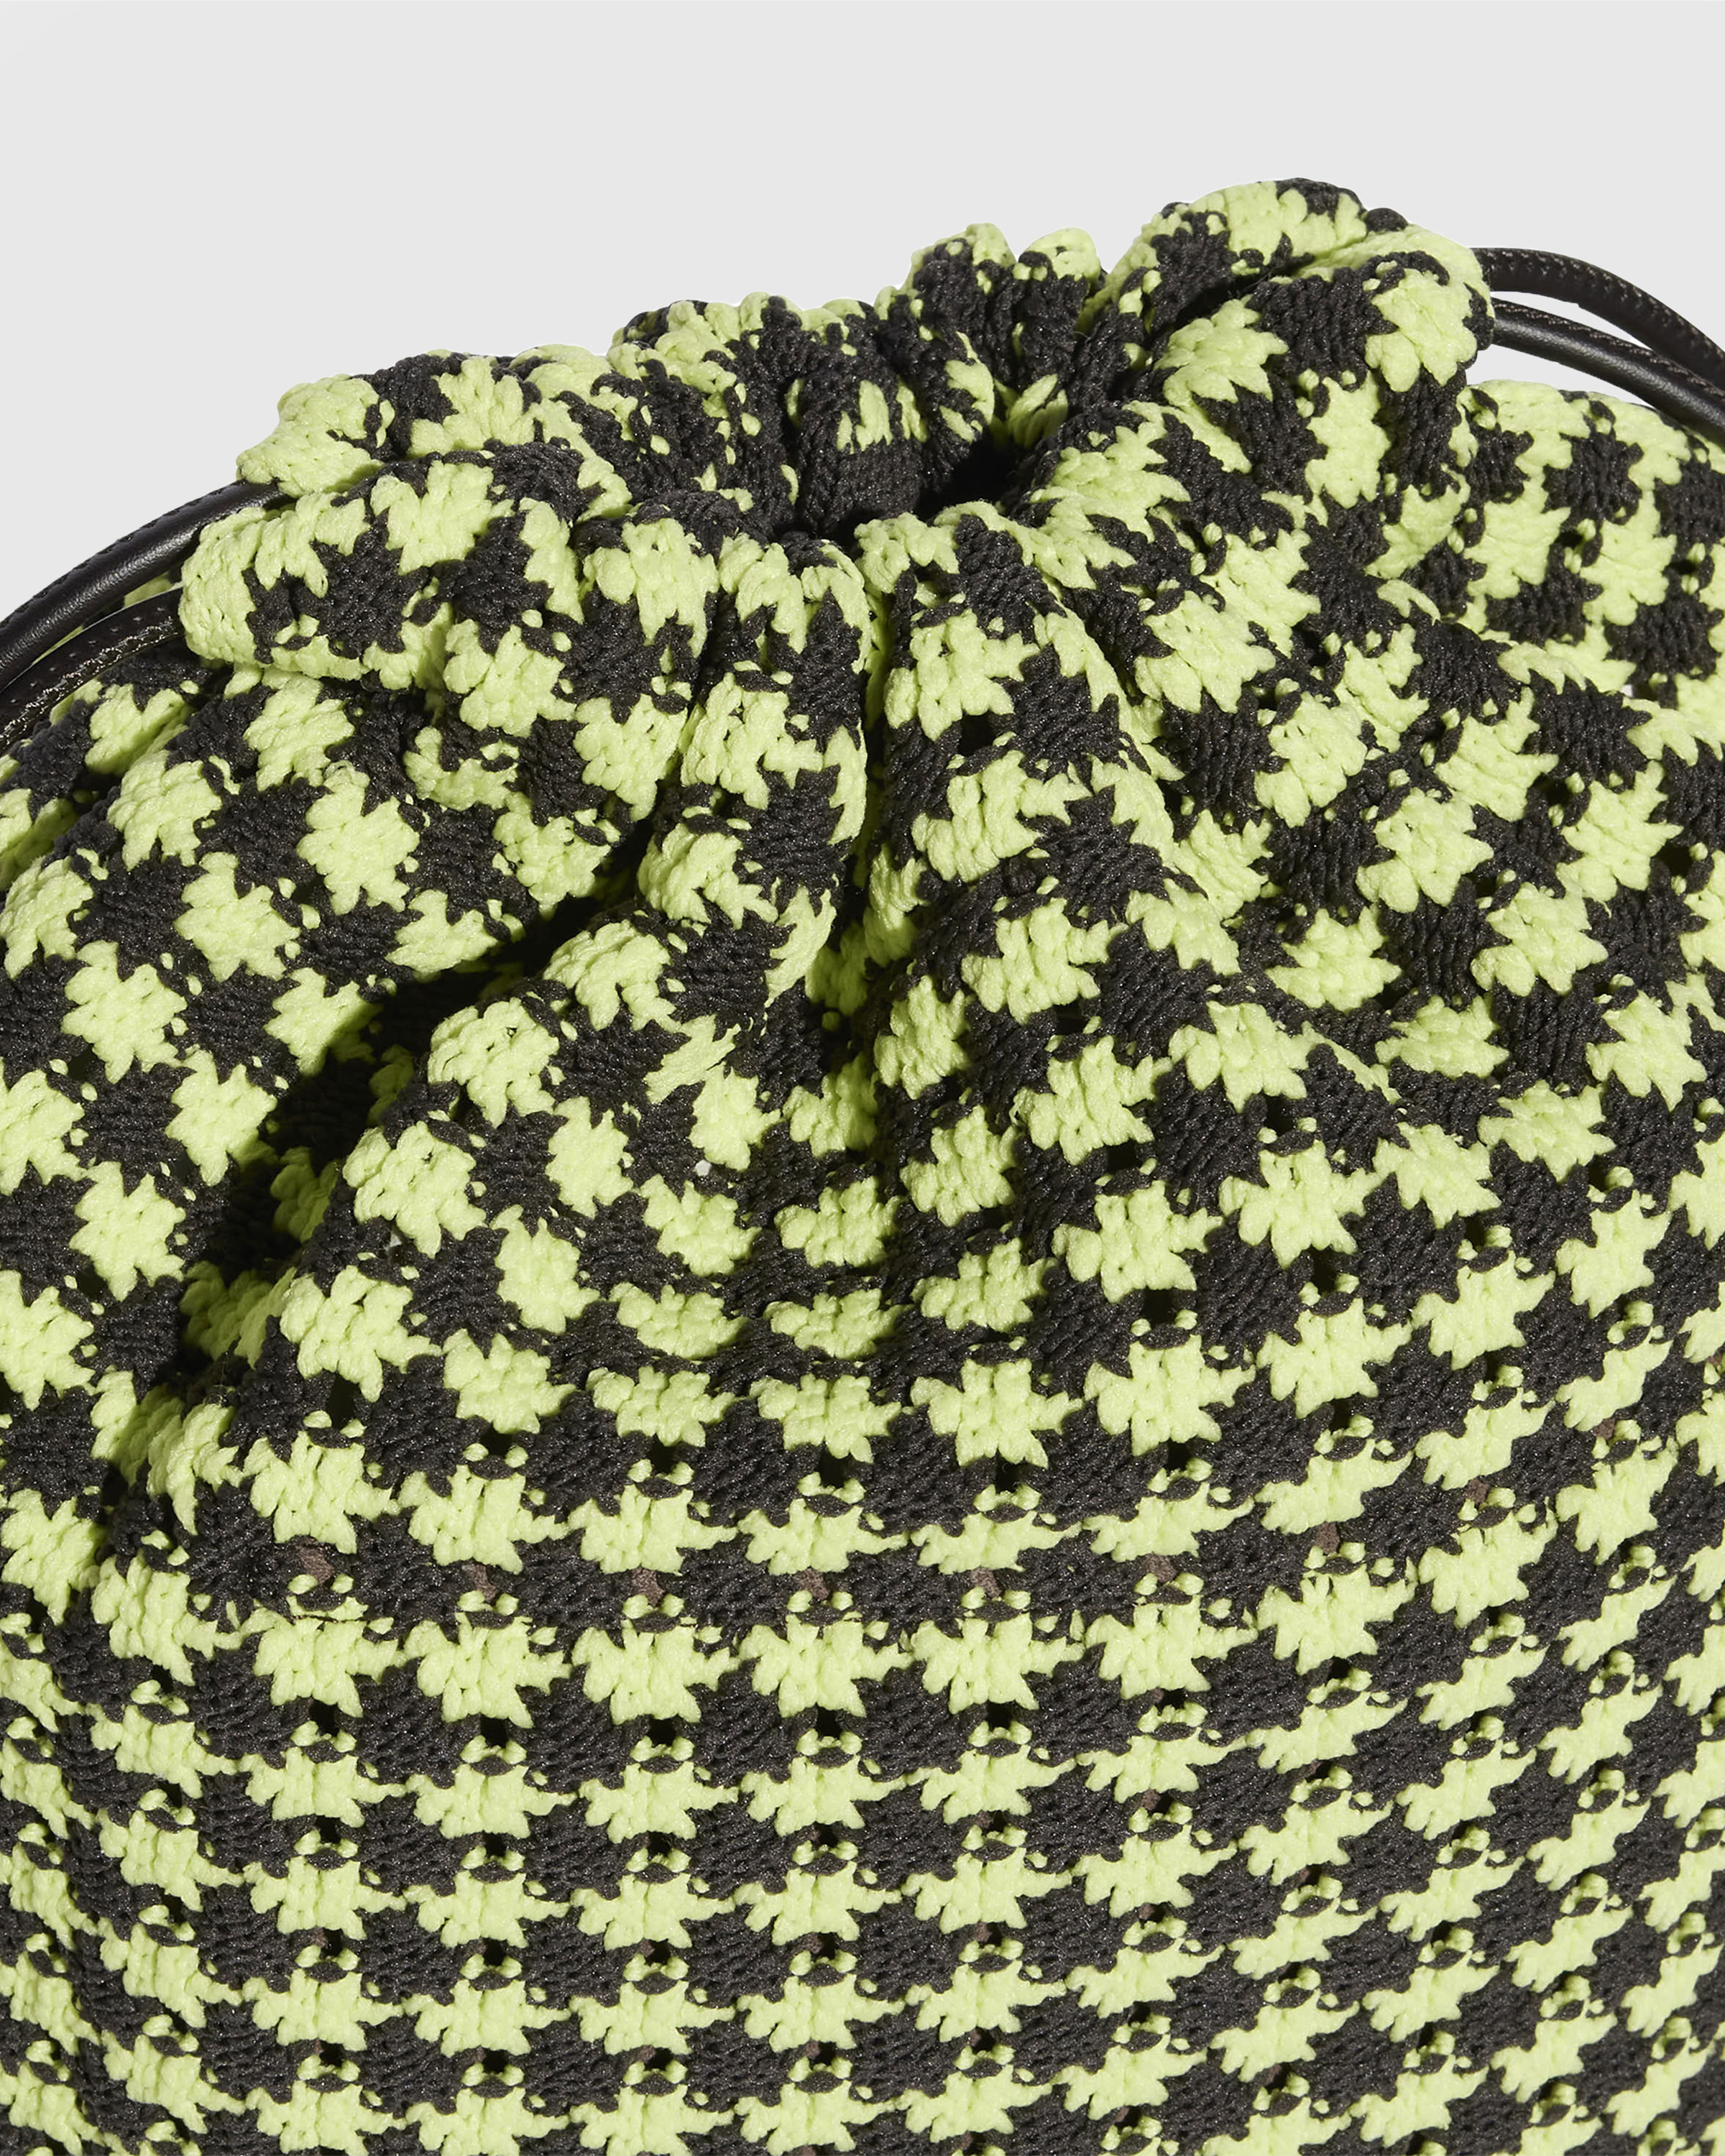 Adidas x Wales Bonner – Crochet Bag Semi Frozen Yellow/Night Brown - Shoulder Bags - Yellow - Image 5